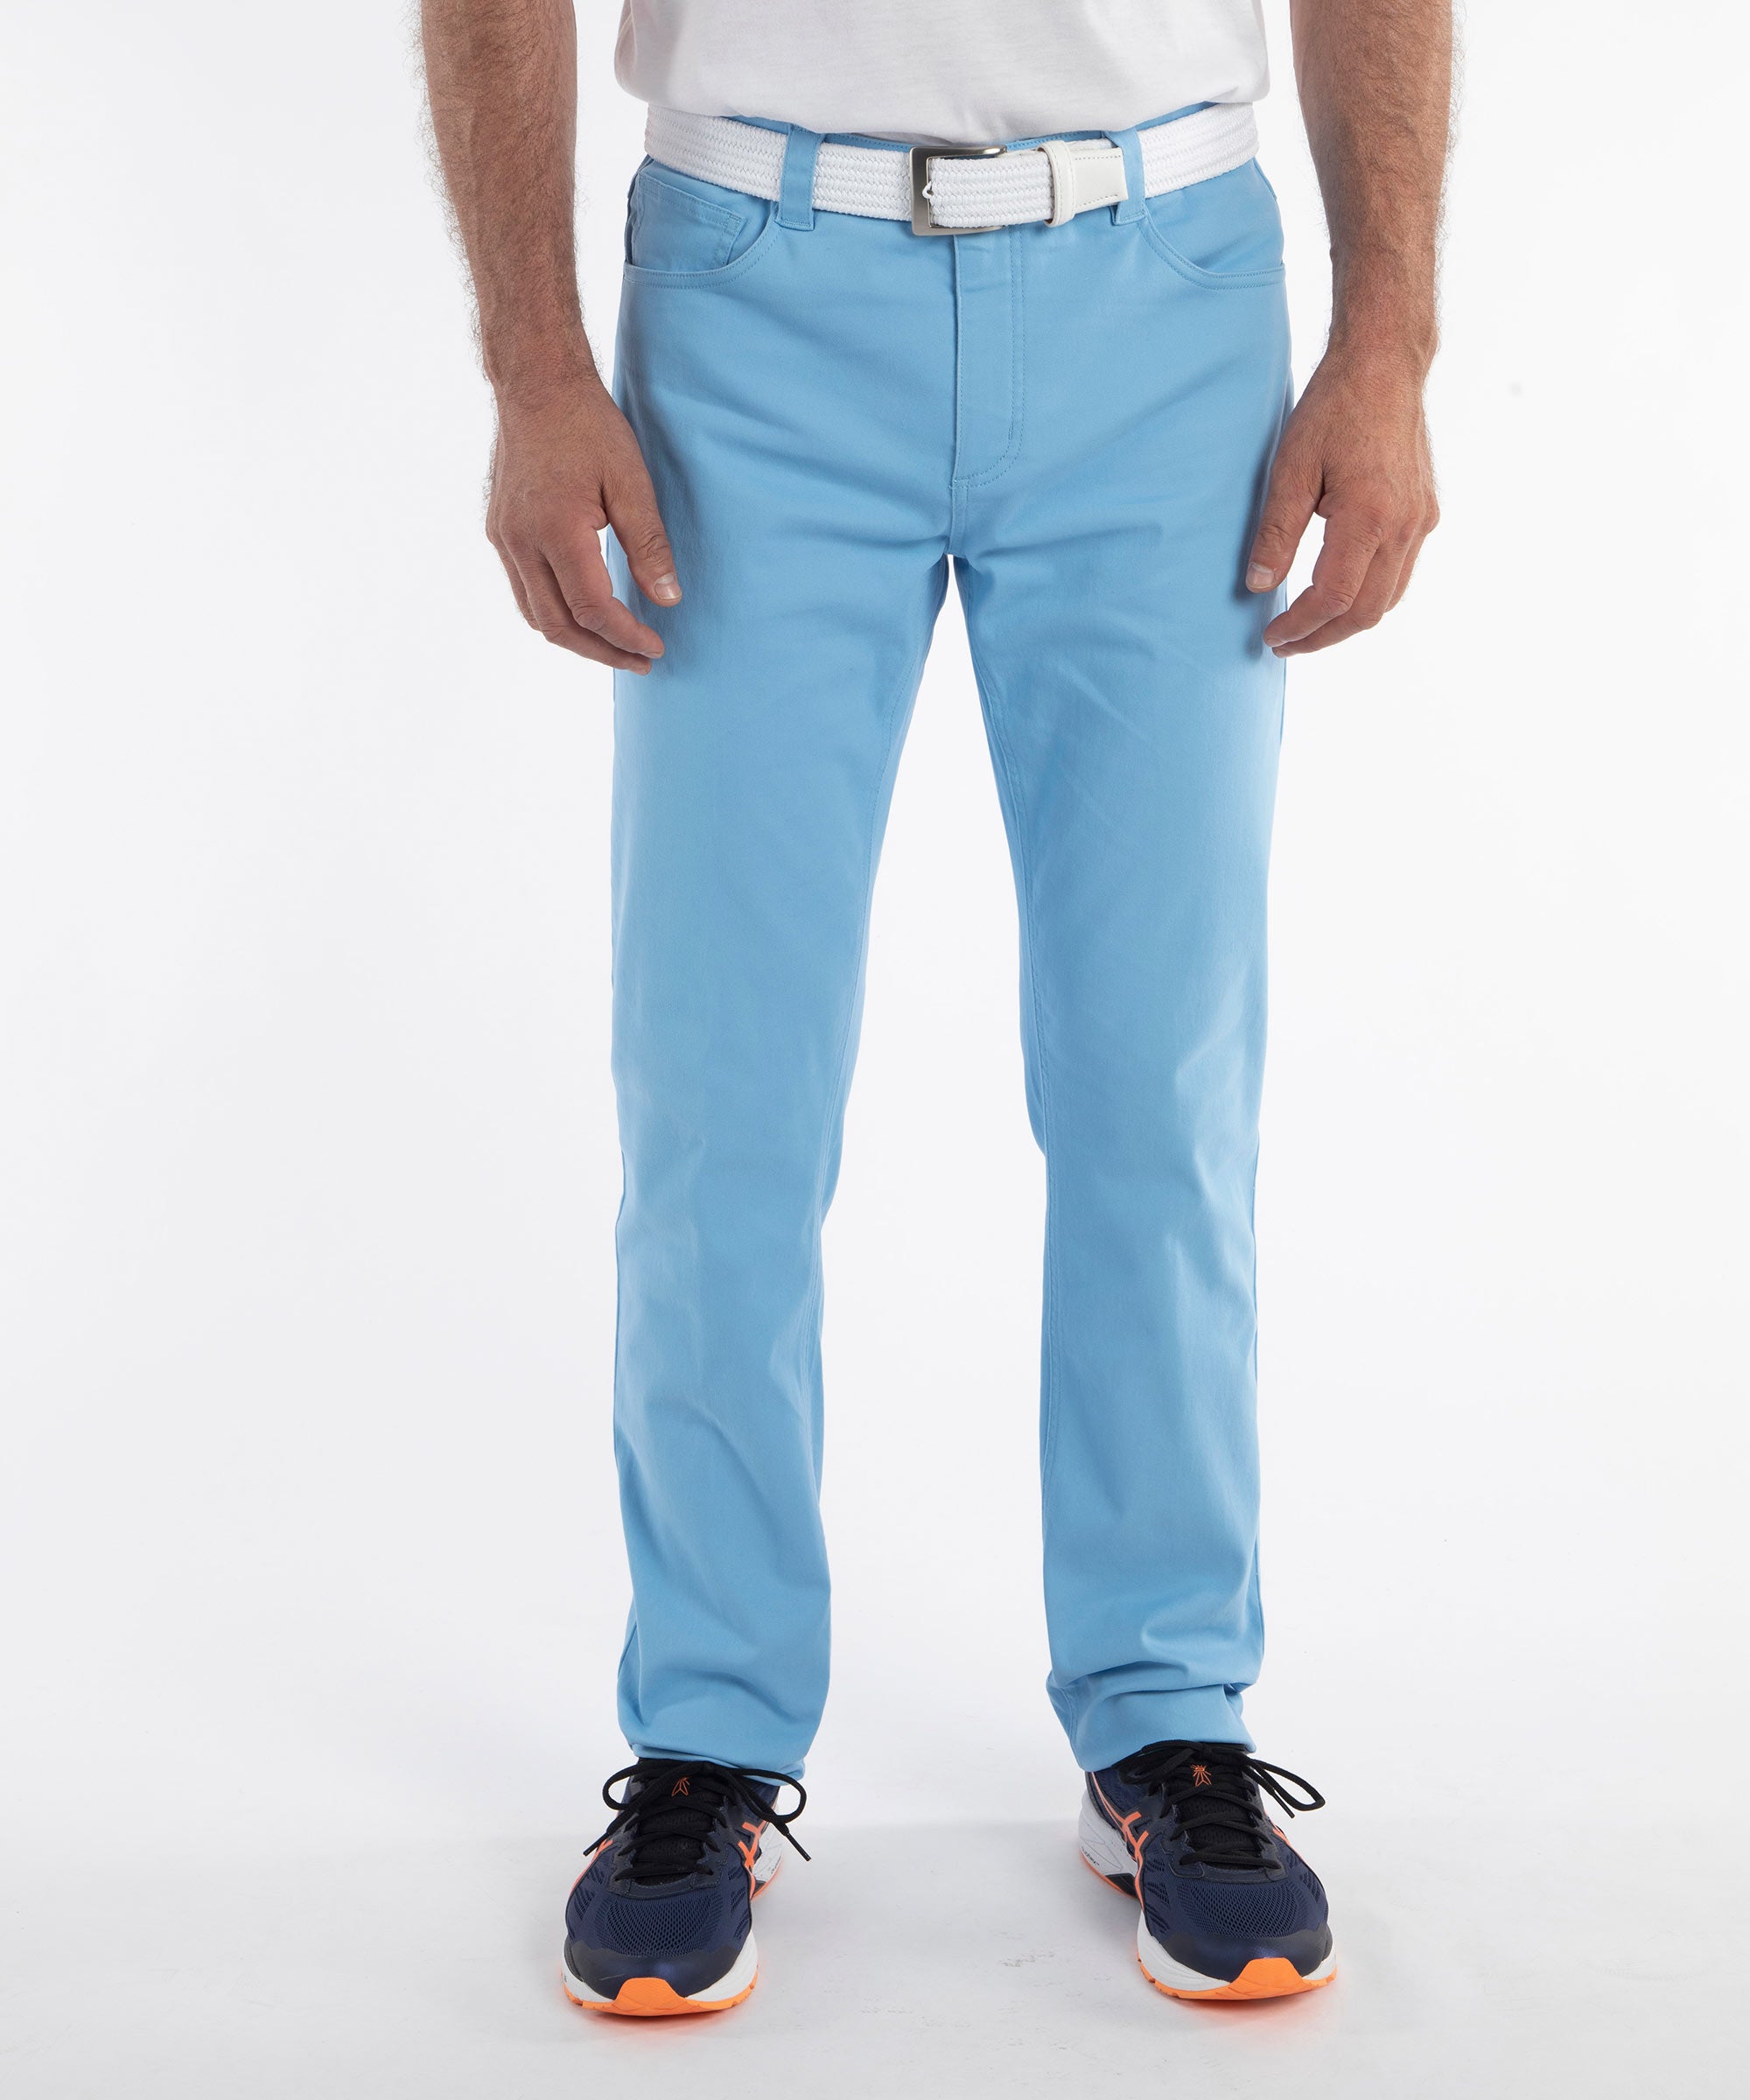 Blue Chino Pant Slim Fit Cotton Stretch